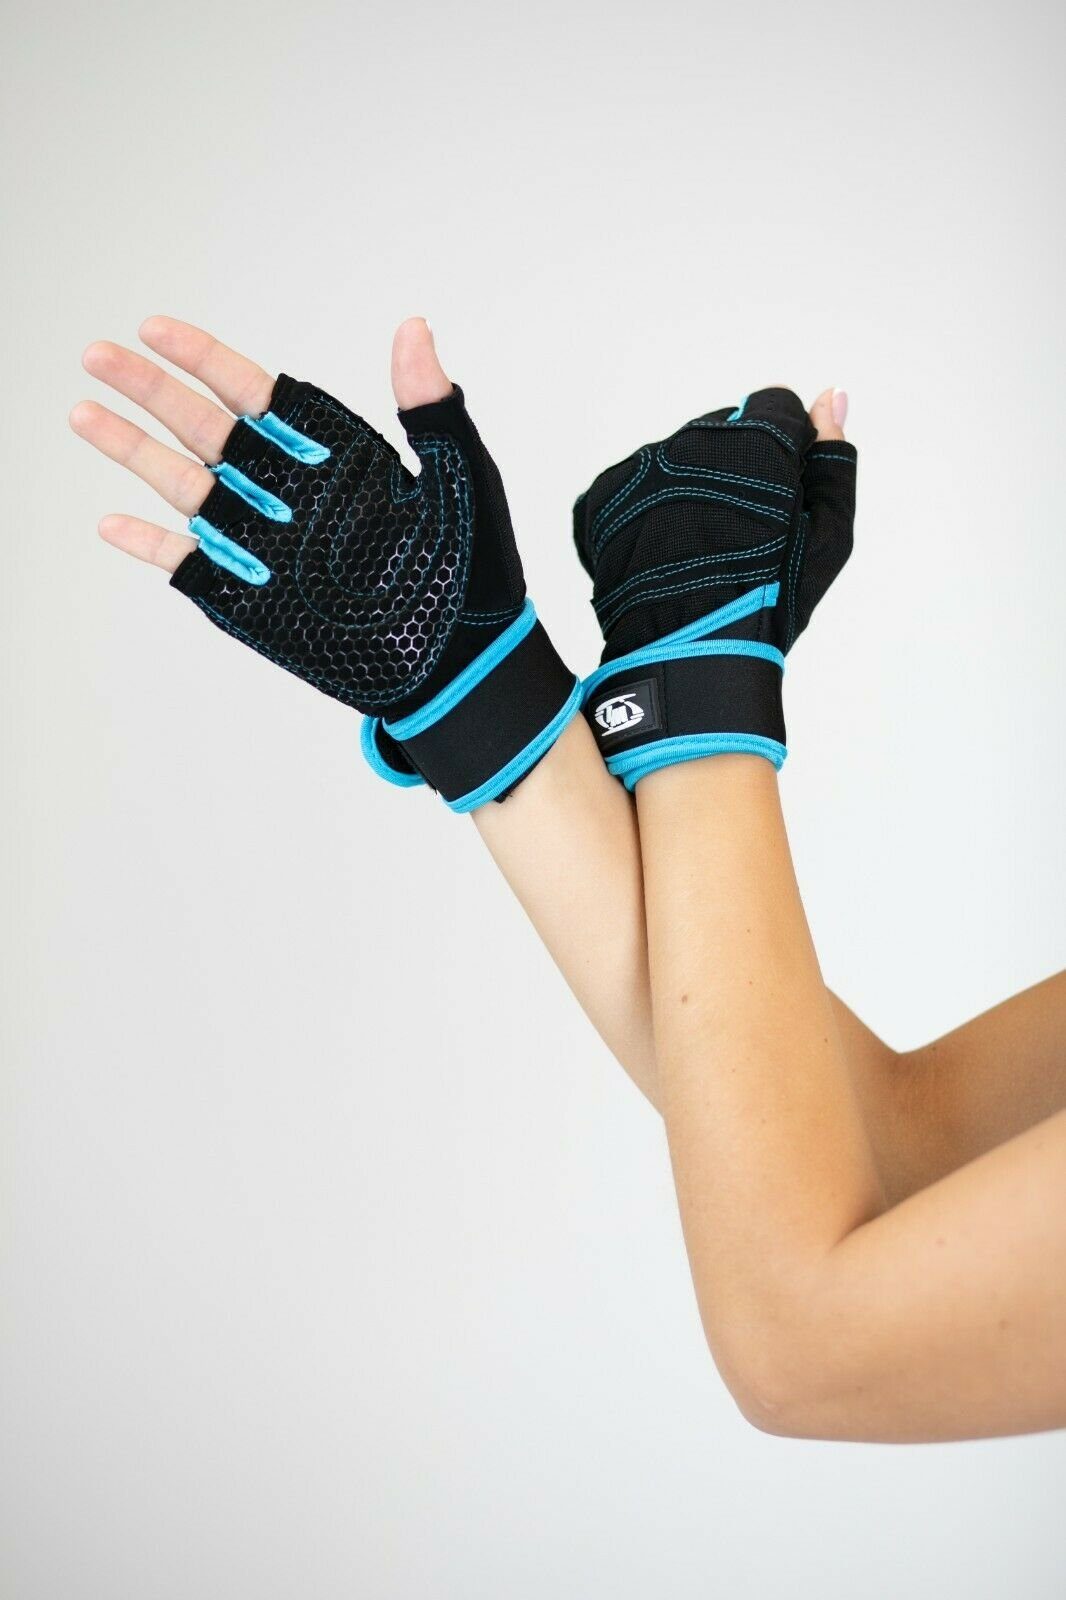 Lorey Medtec Multisporthandschuhe Hochwertige Fitness Handschuhe, Fitnesshandschuhe, Trainingshandschuhe Blau